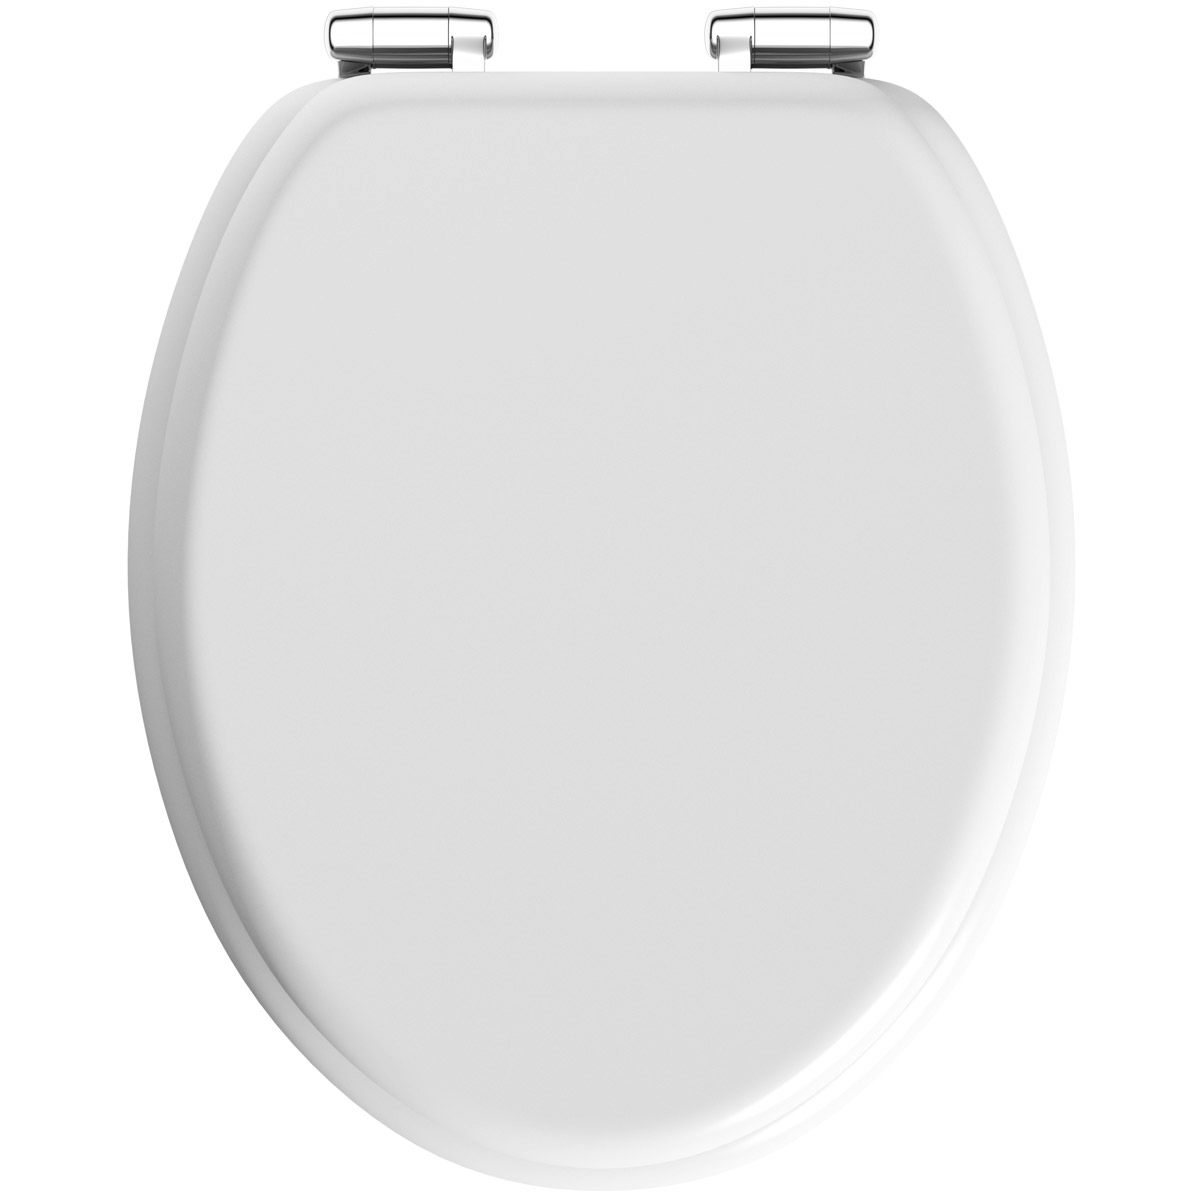 Bottom Fix White Standard Oval Soft Close Toilet Seat 